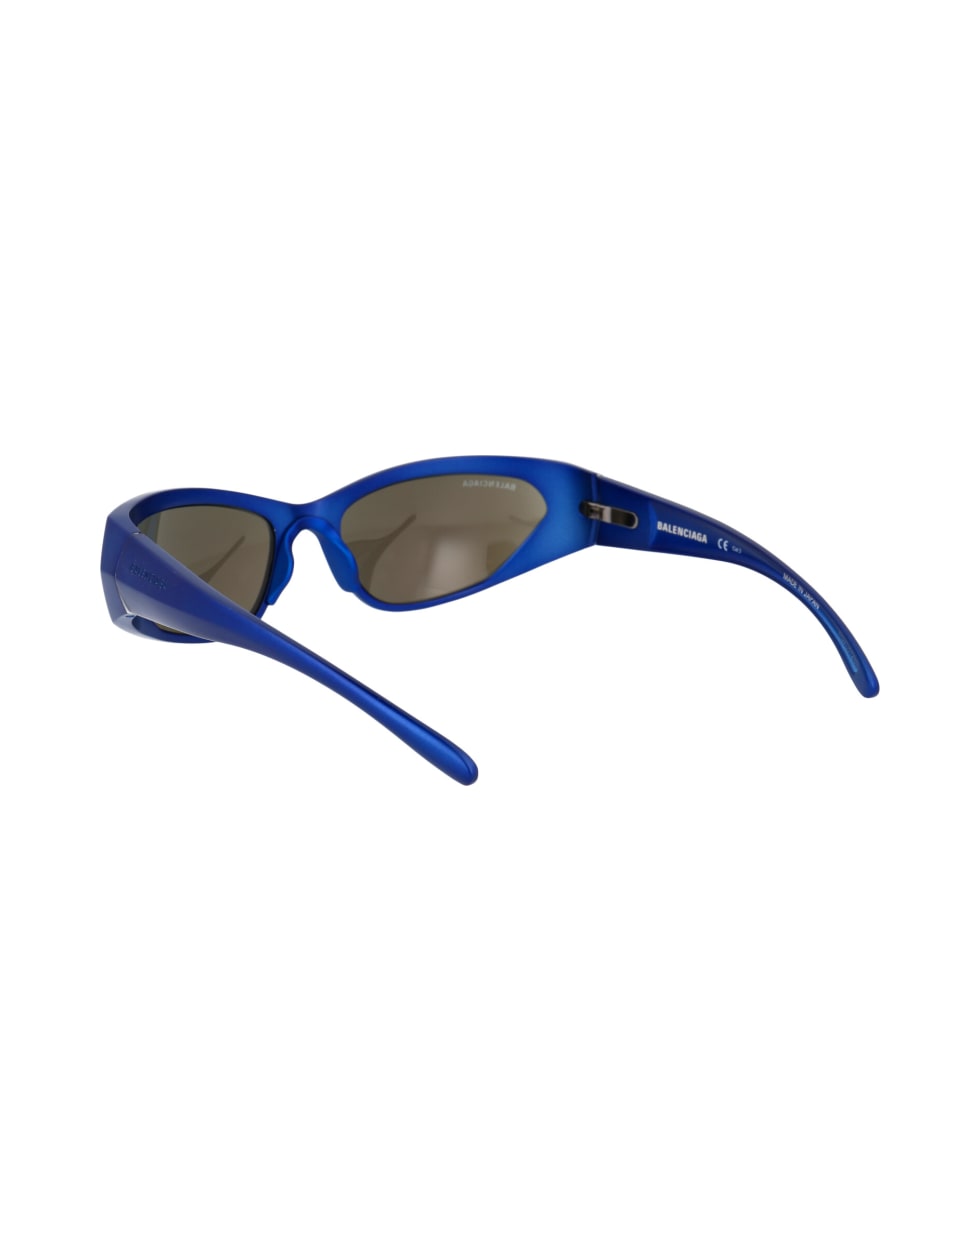 Balenciaga Eyewear Bb0181s Sunglasses - 003 BLUE BLUE BLUE